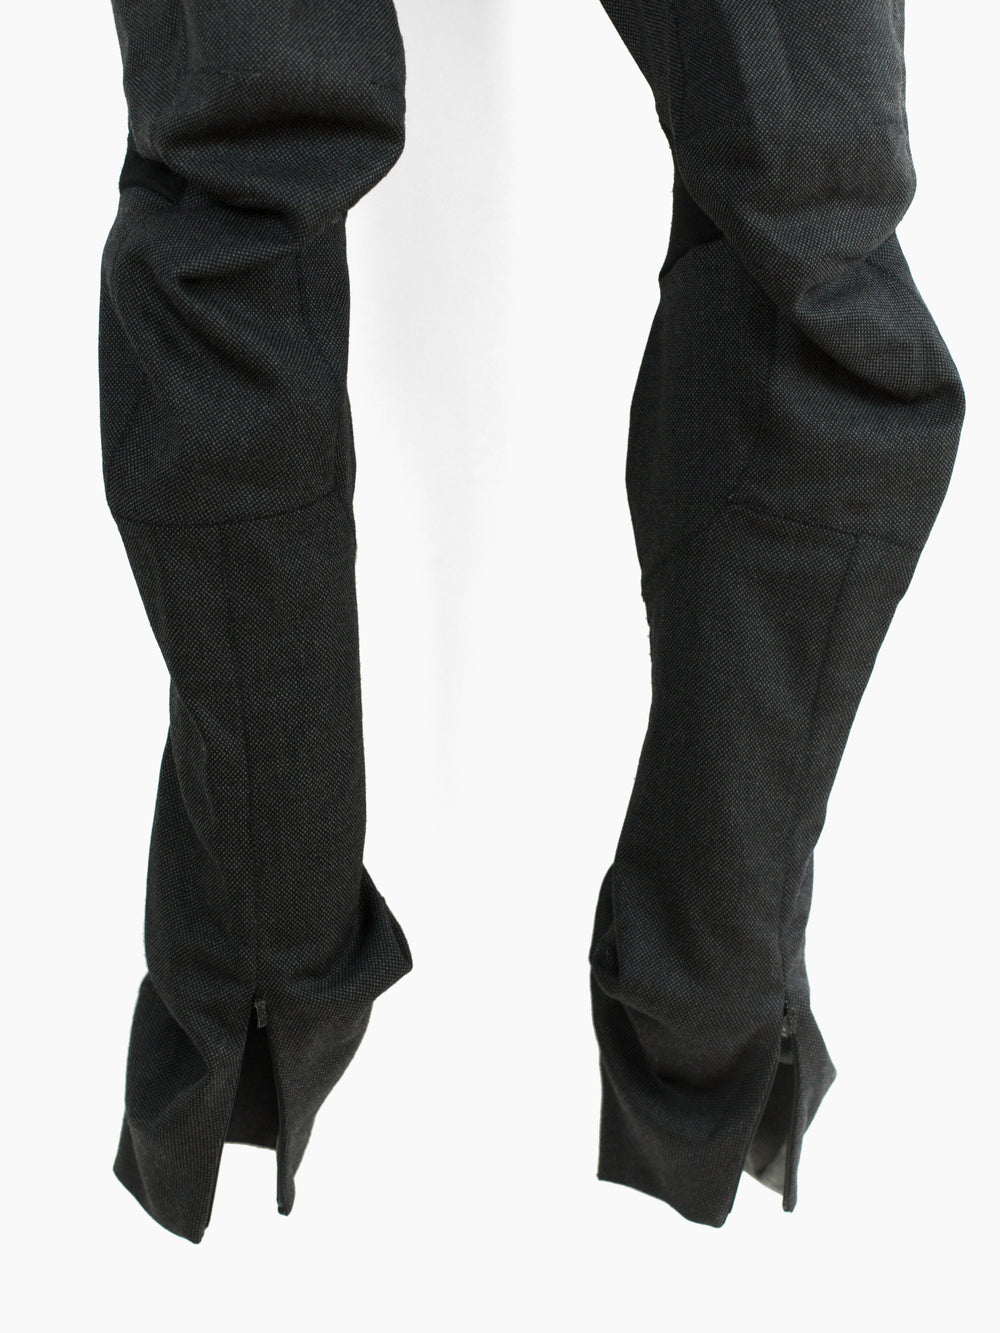 Aitor Throup 'Legs' Anatomical Pants